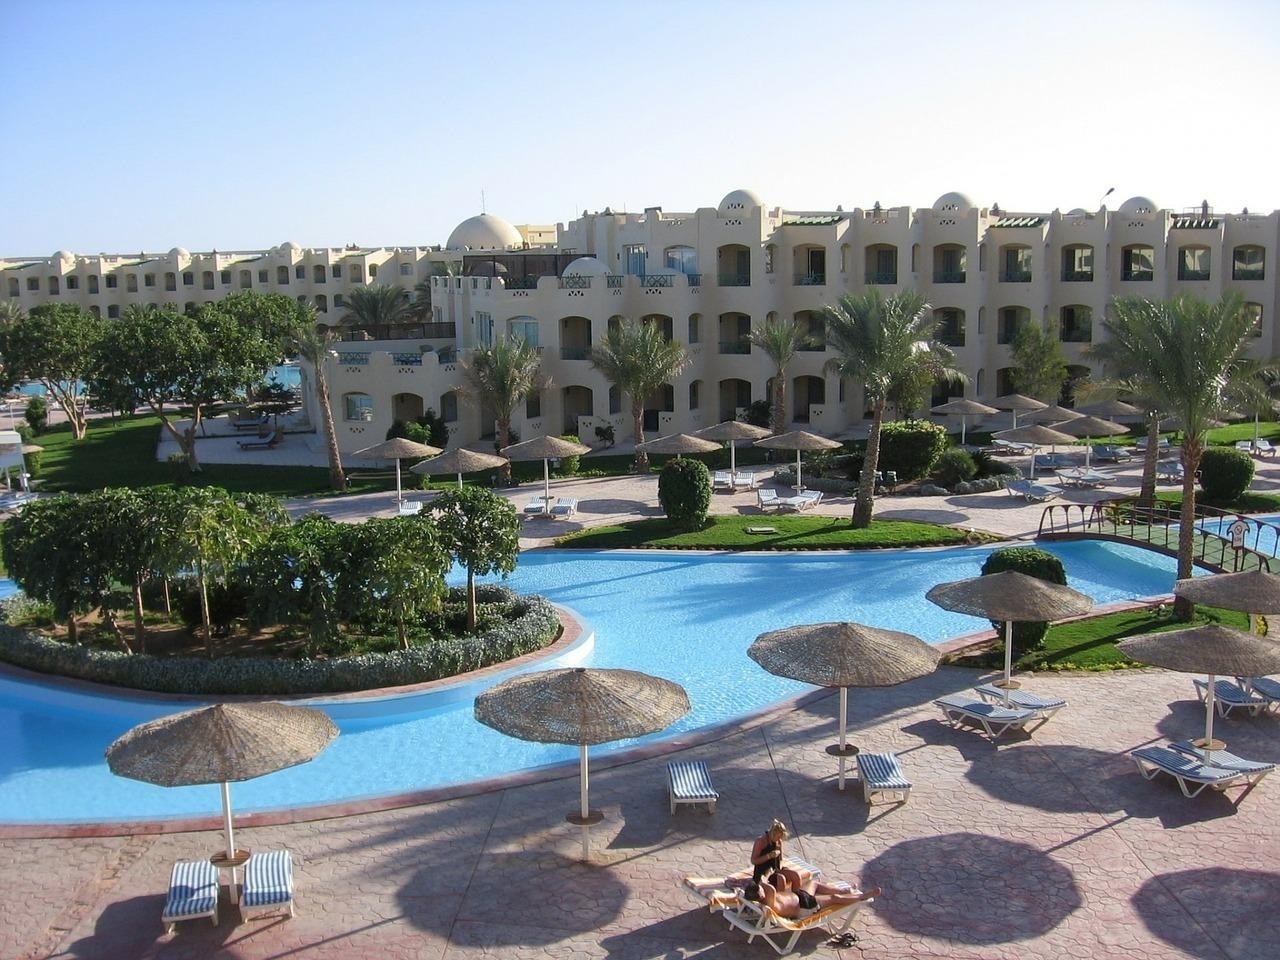 hotelový resort Hurghada egypt